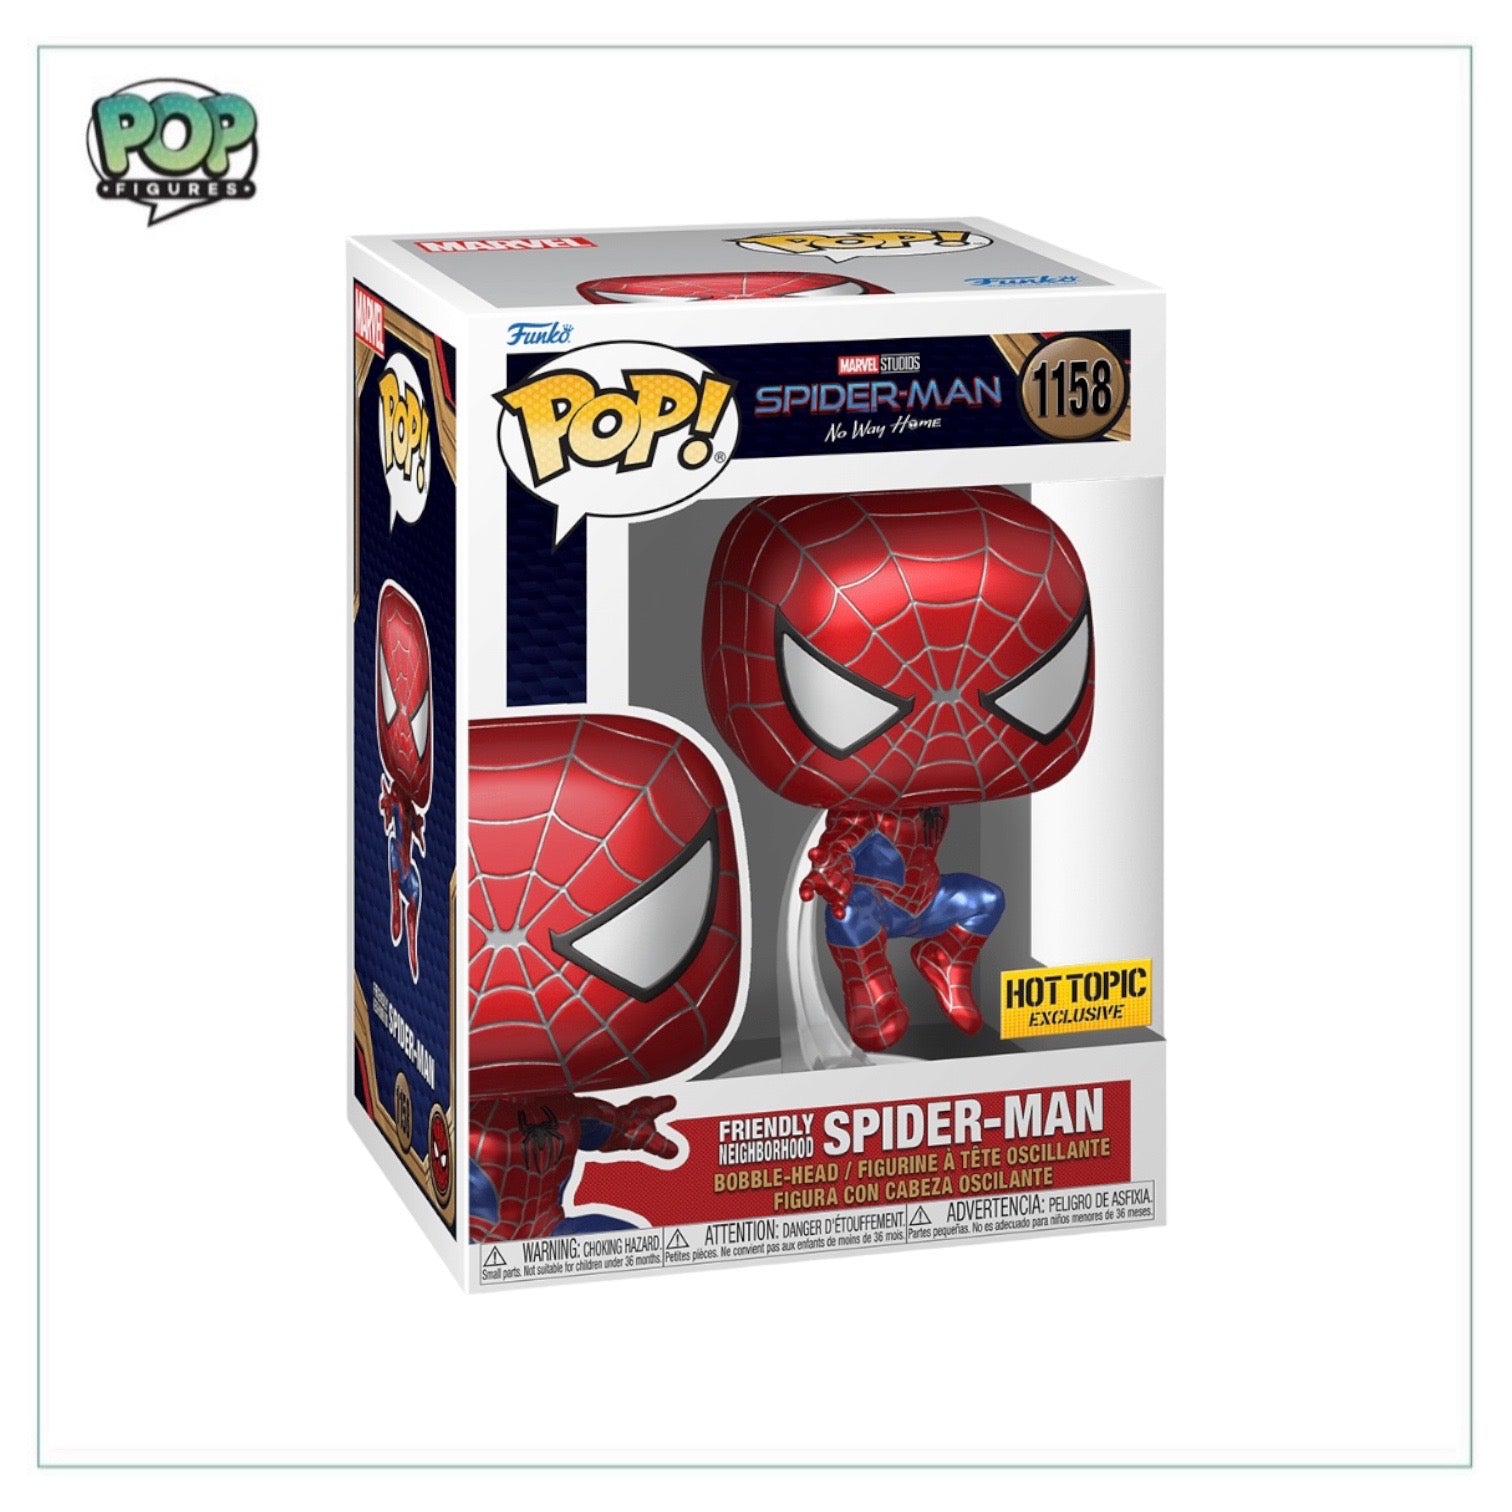 Friendly Neighborhood Spider-Man #1158 (Metallic) Funko Pop! - Spider-Man No Way Home - Hot Topic Exclusive